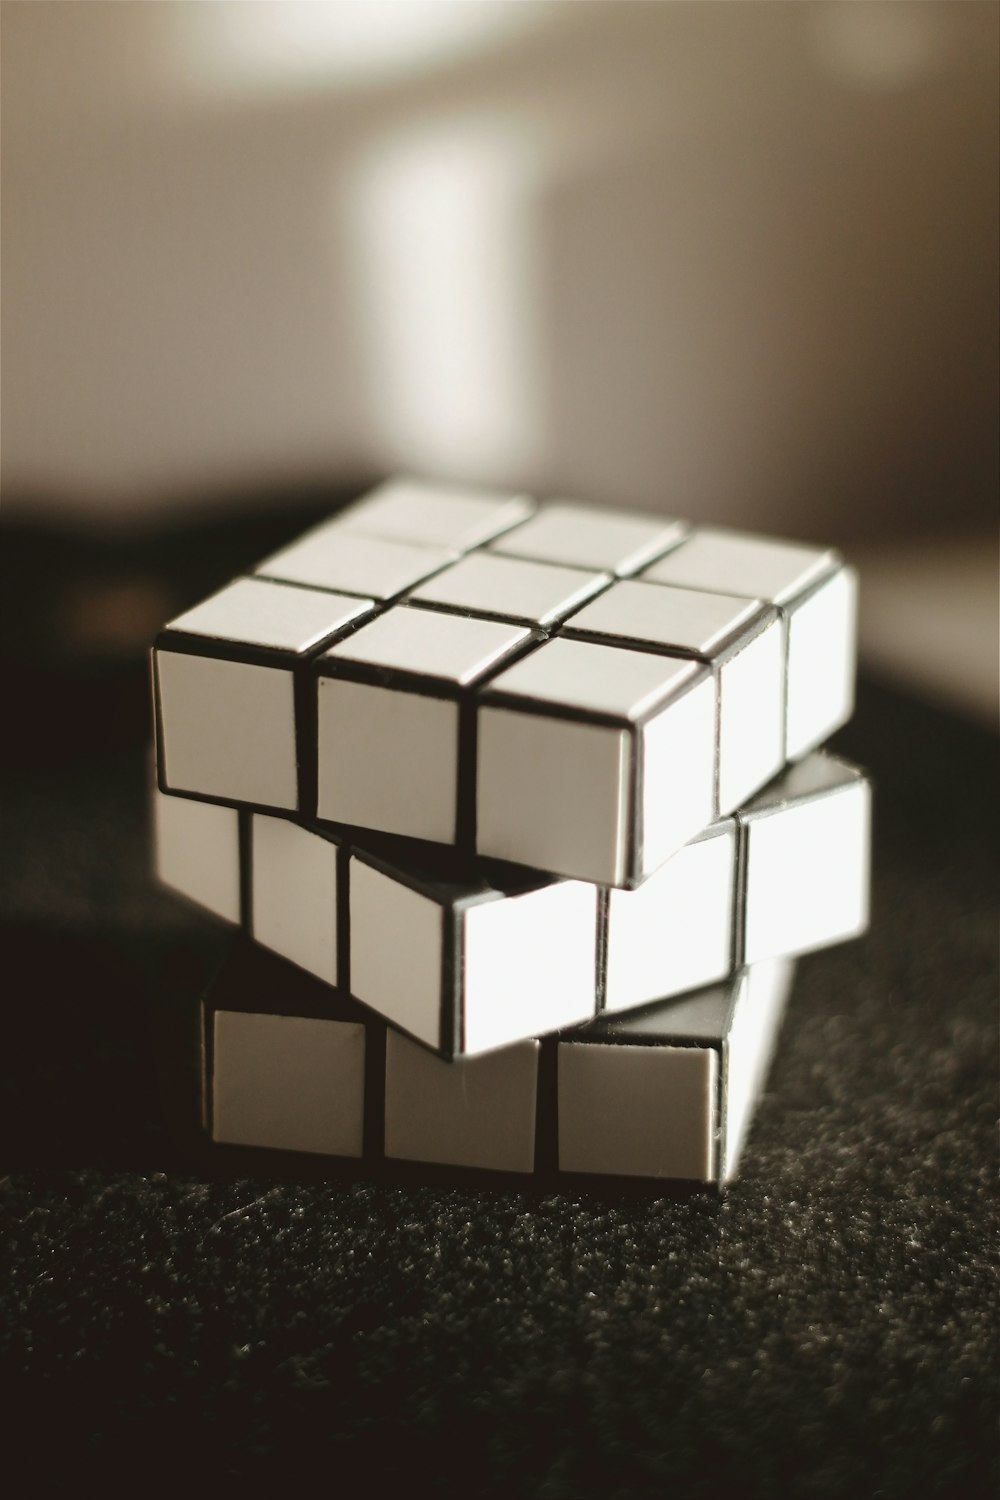 weiß und schwarz 3 x 3 Rubiks Würfel